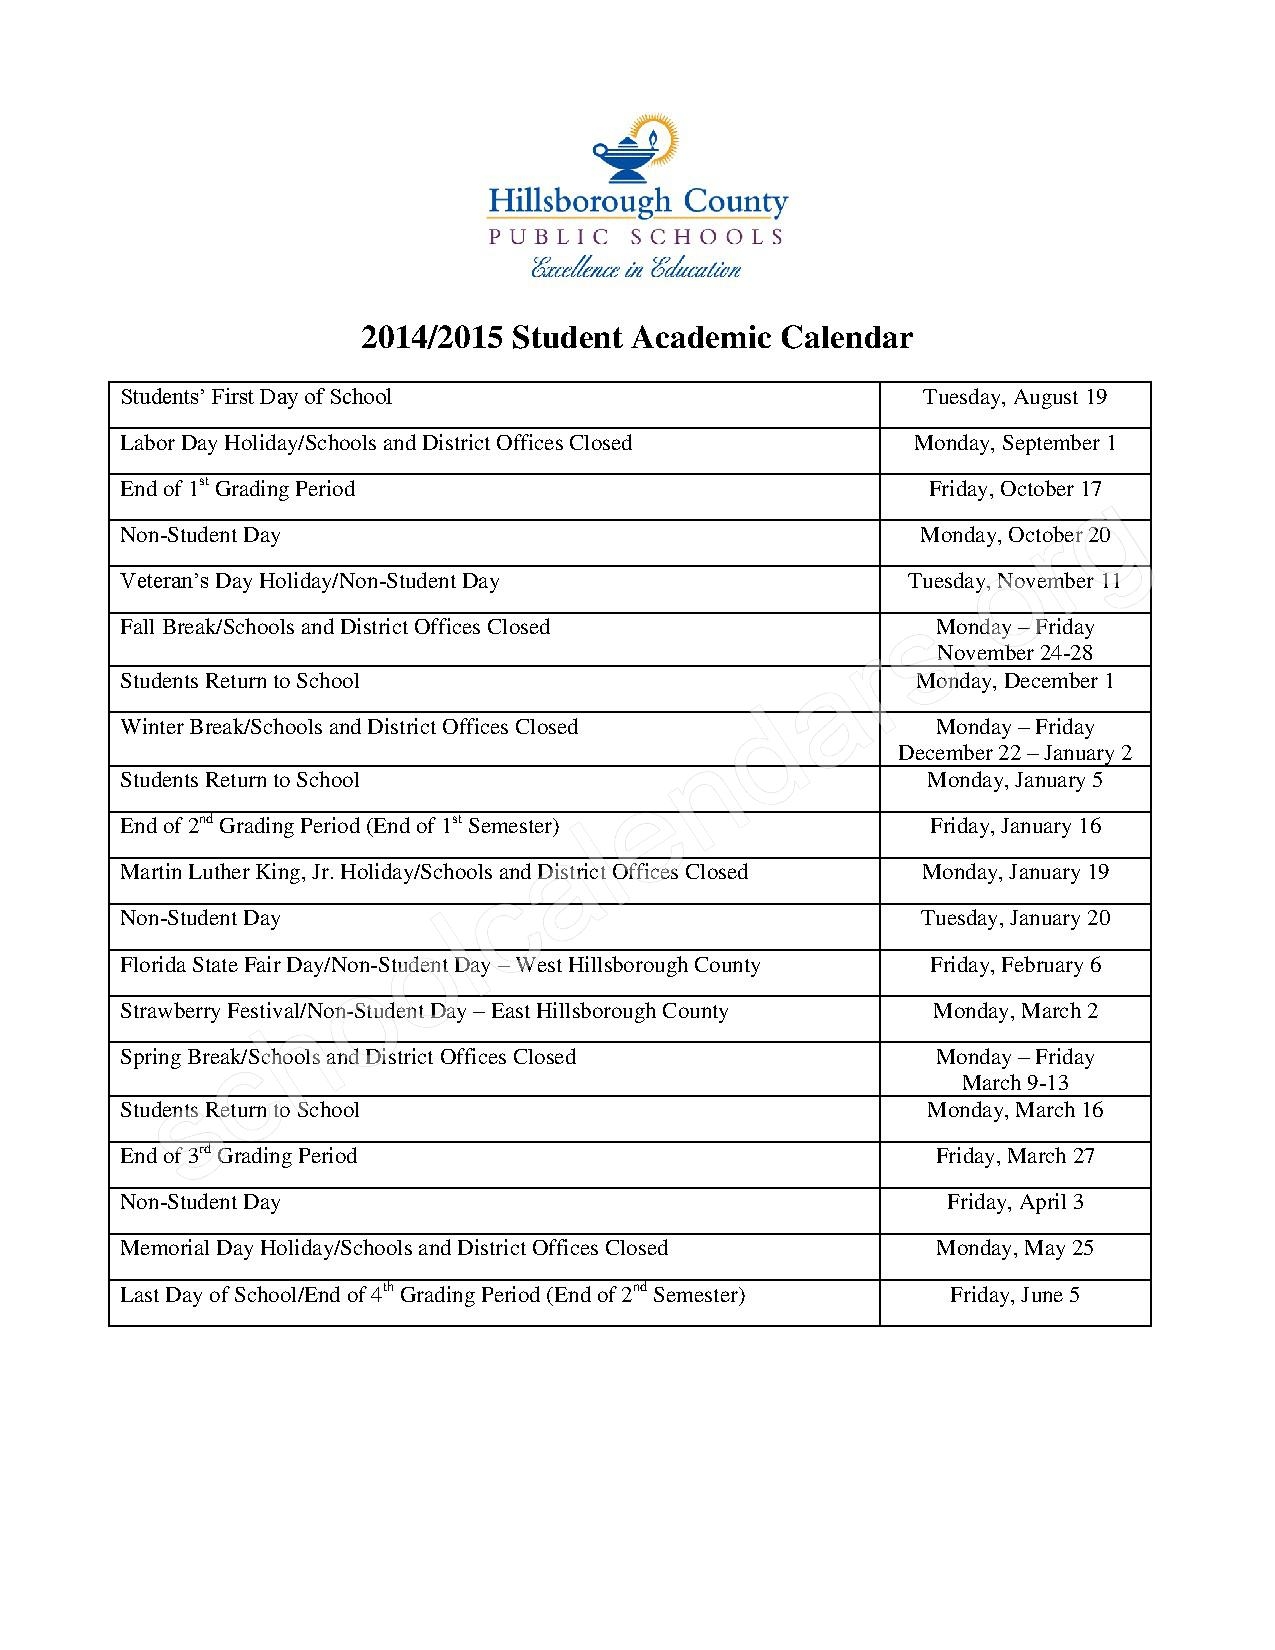 Hillsborough County Schools Calendar Qualads